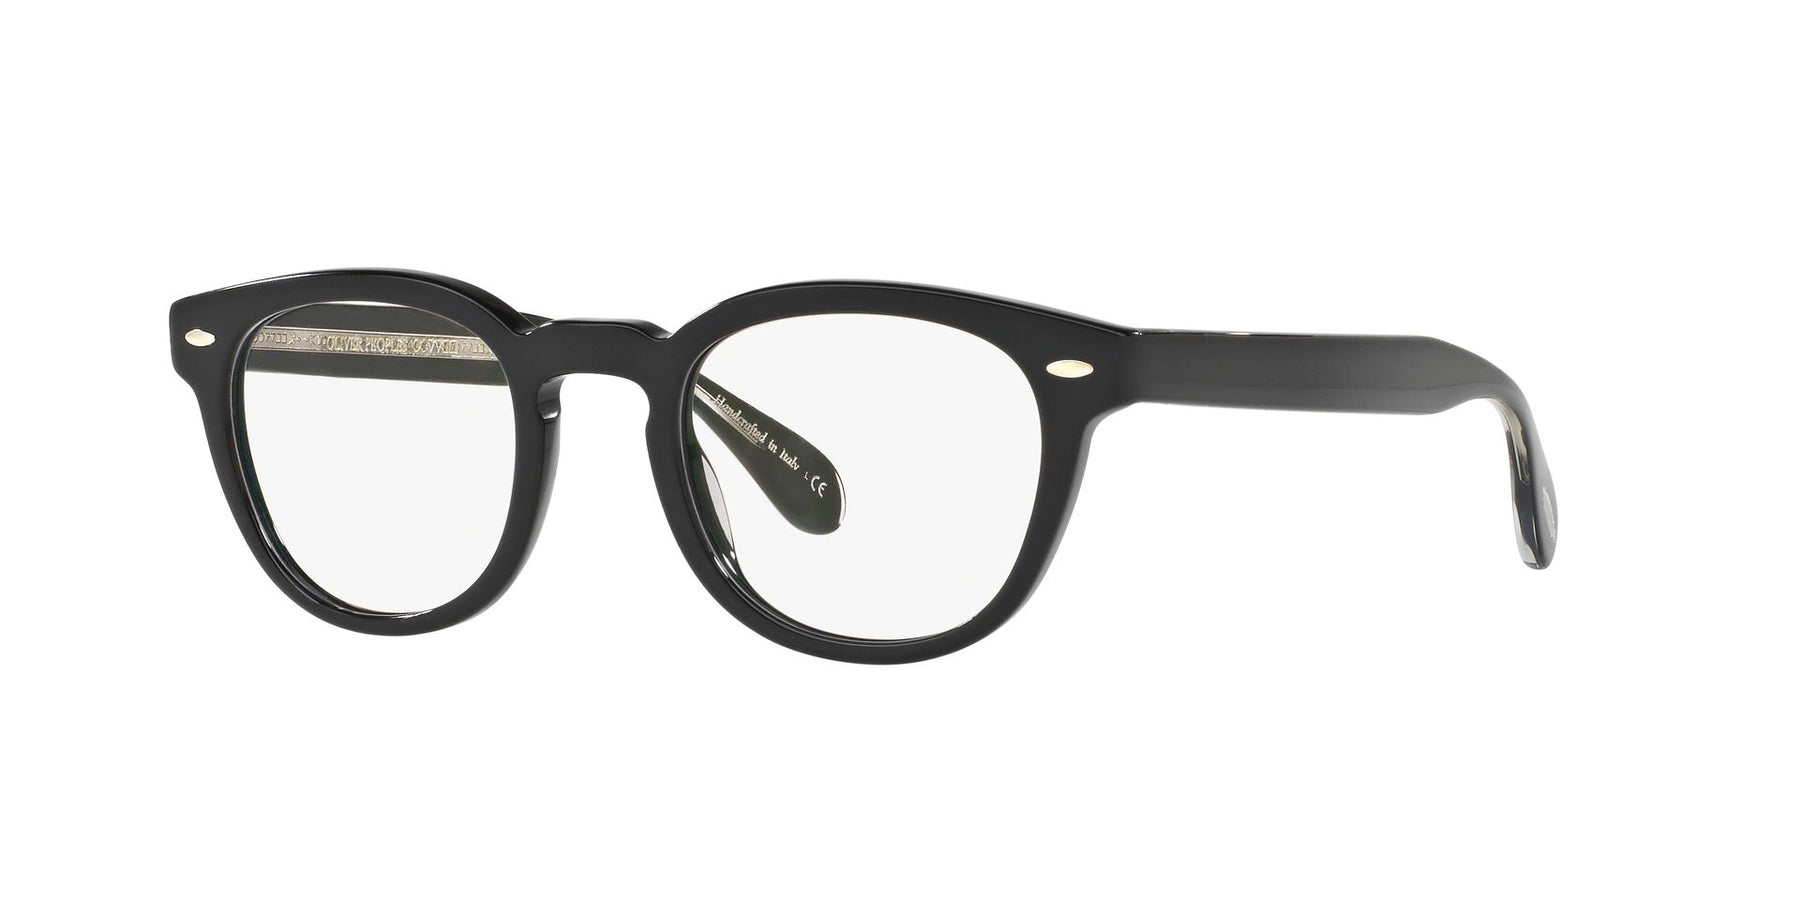 Oliver Peoples Sheldrake OV5036 Oval Glasses | Fashion Eyewear